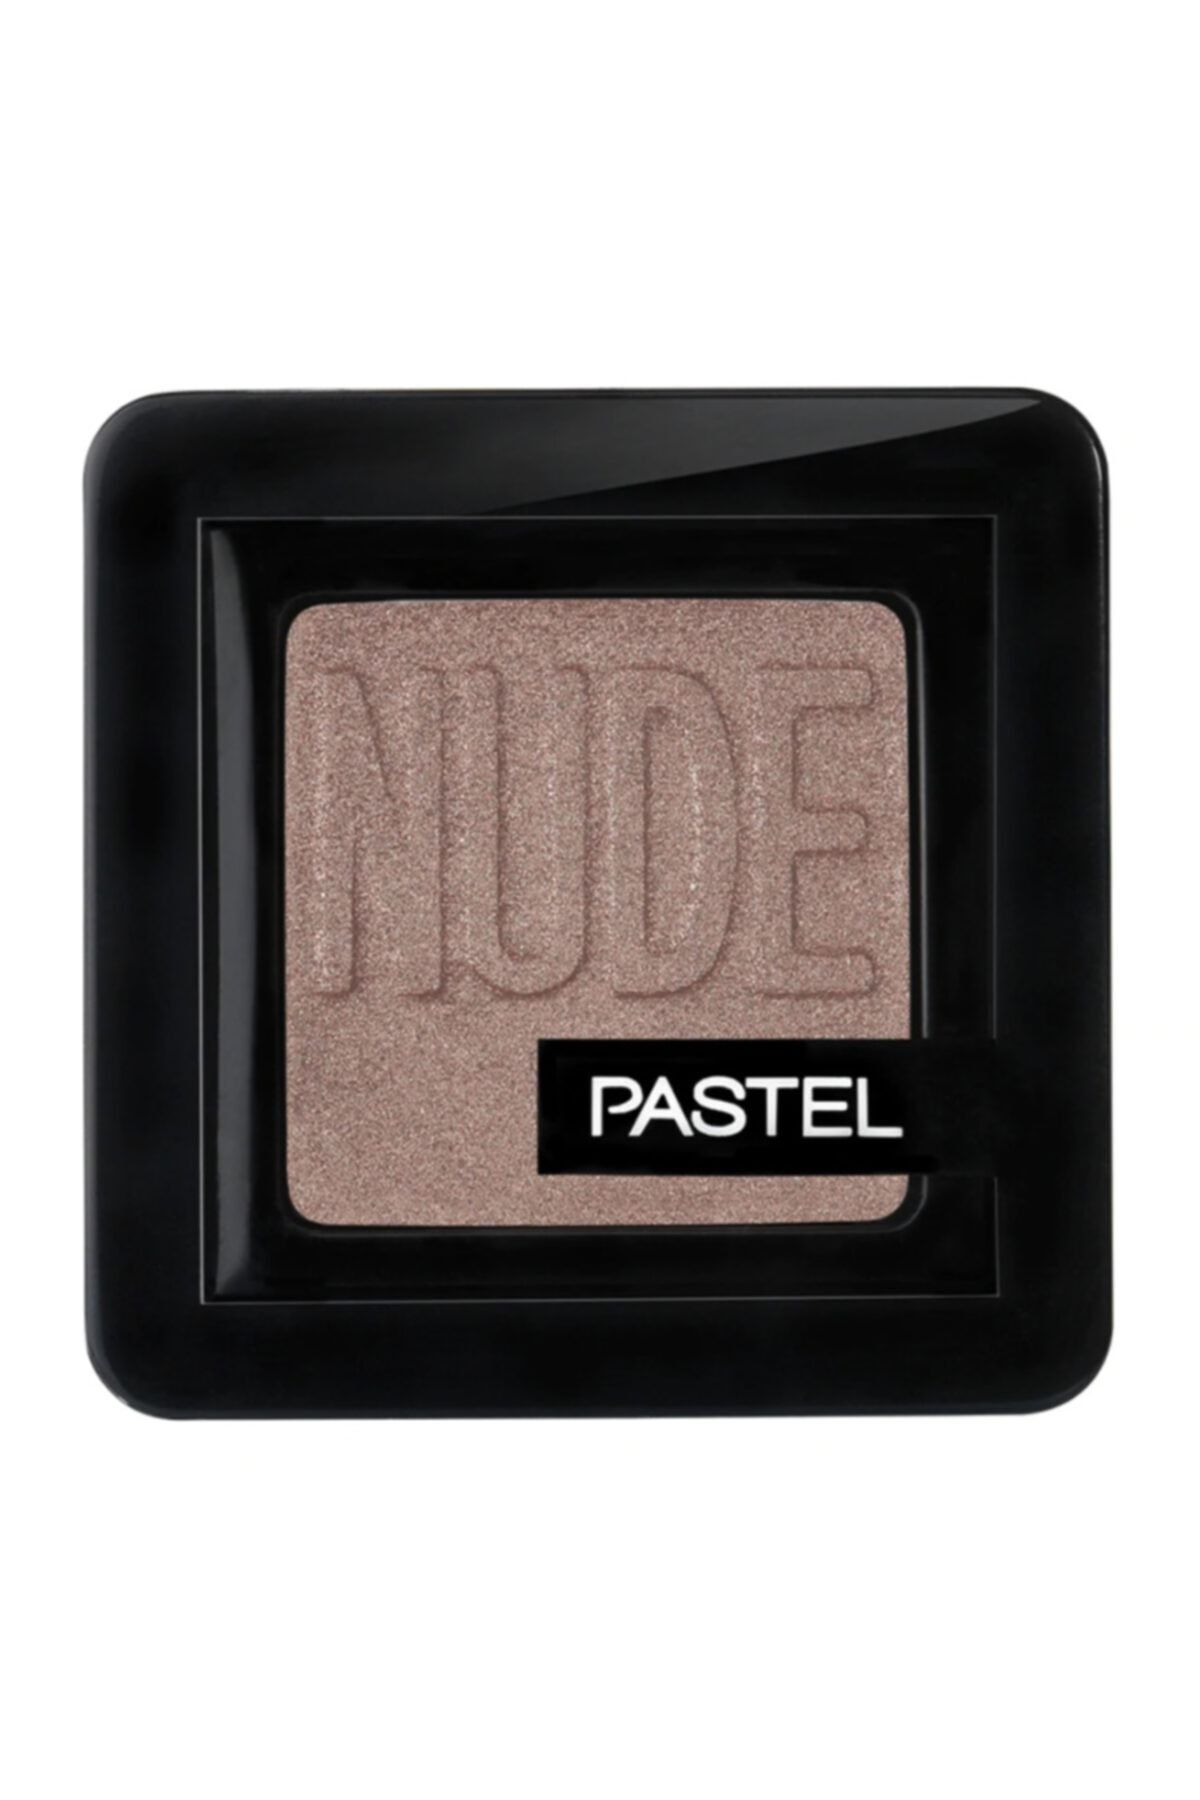 Pastel Profashion Nude Single Eyeshadow 81 Bronze